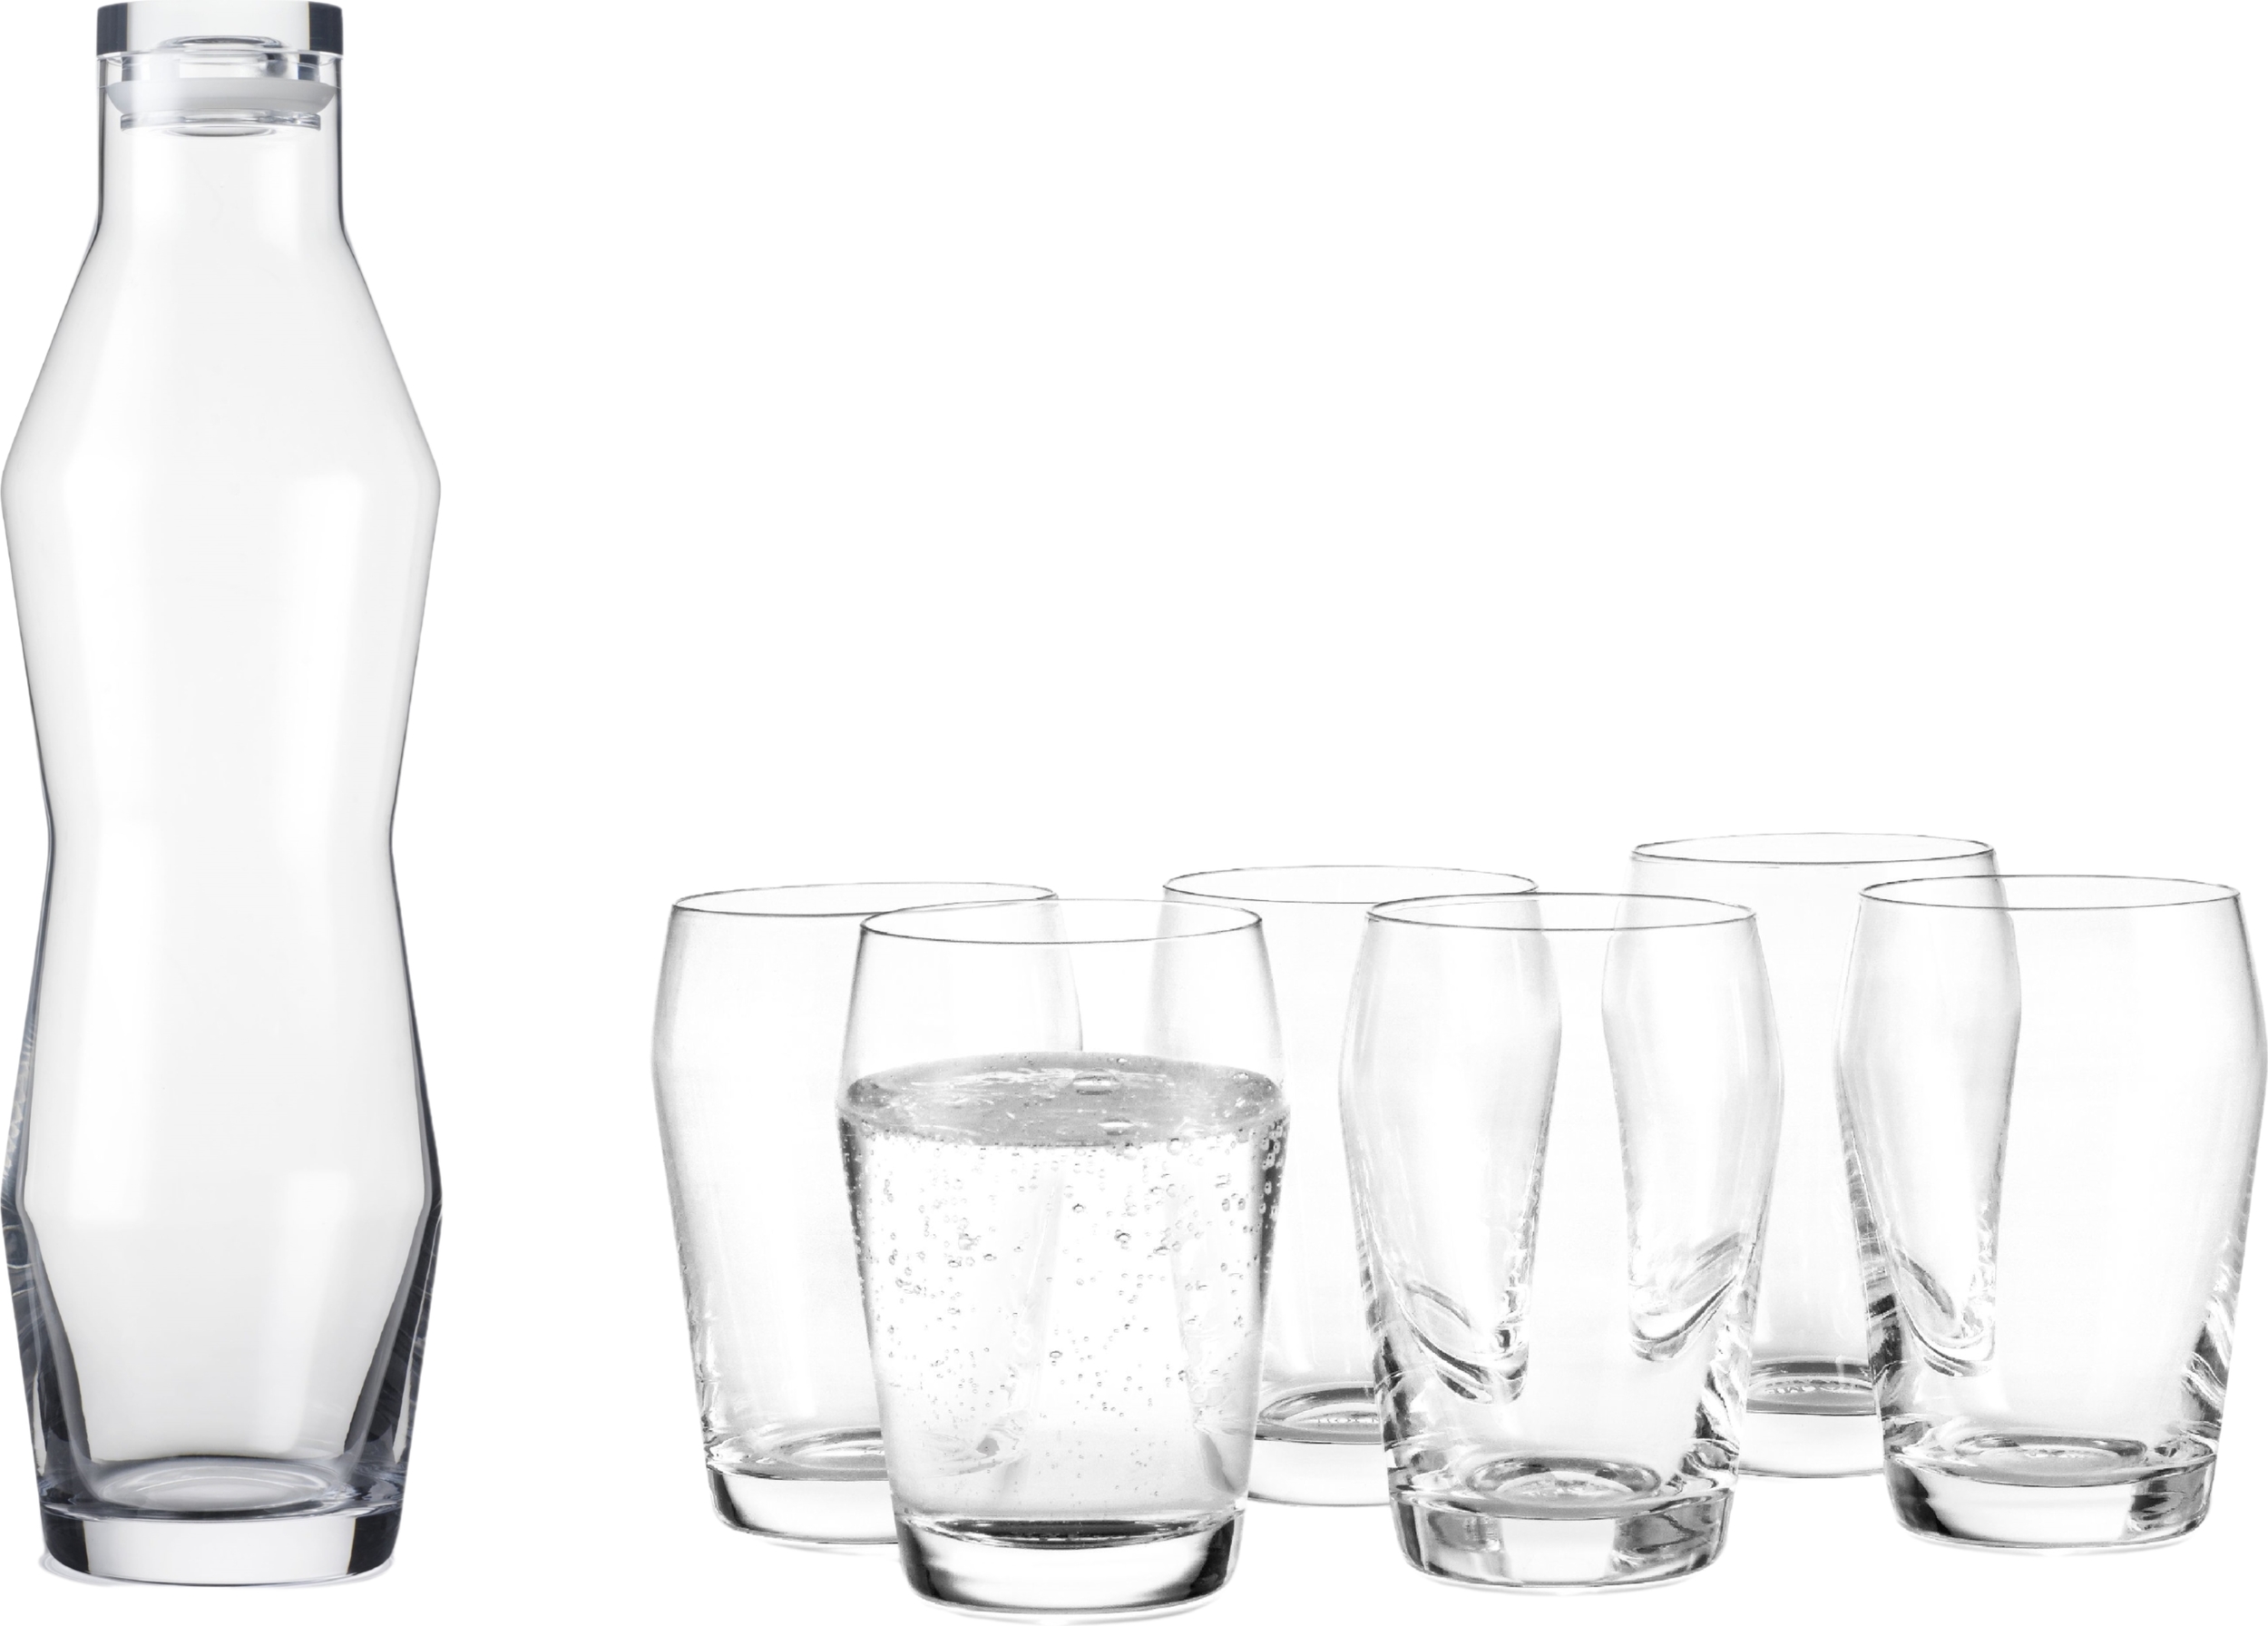 https://3fa-media.com/kahler/kahler-perfection-water-decanter-with-6-glasses-7-el__140699_da8387f-s2500x2500.jpg